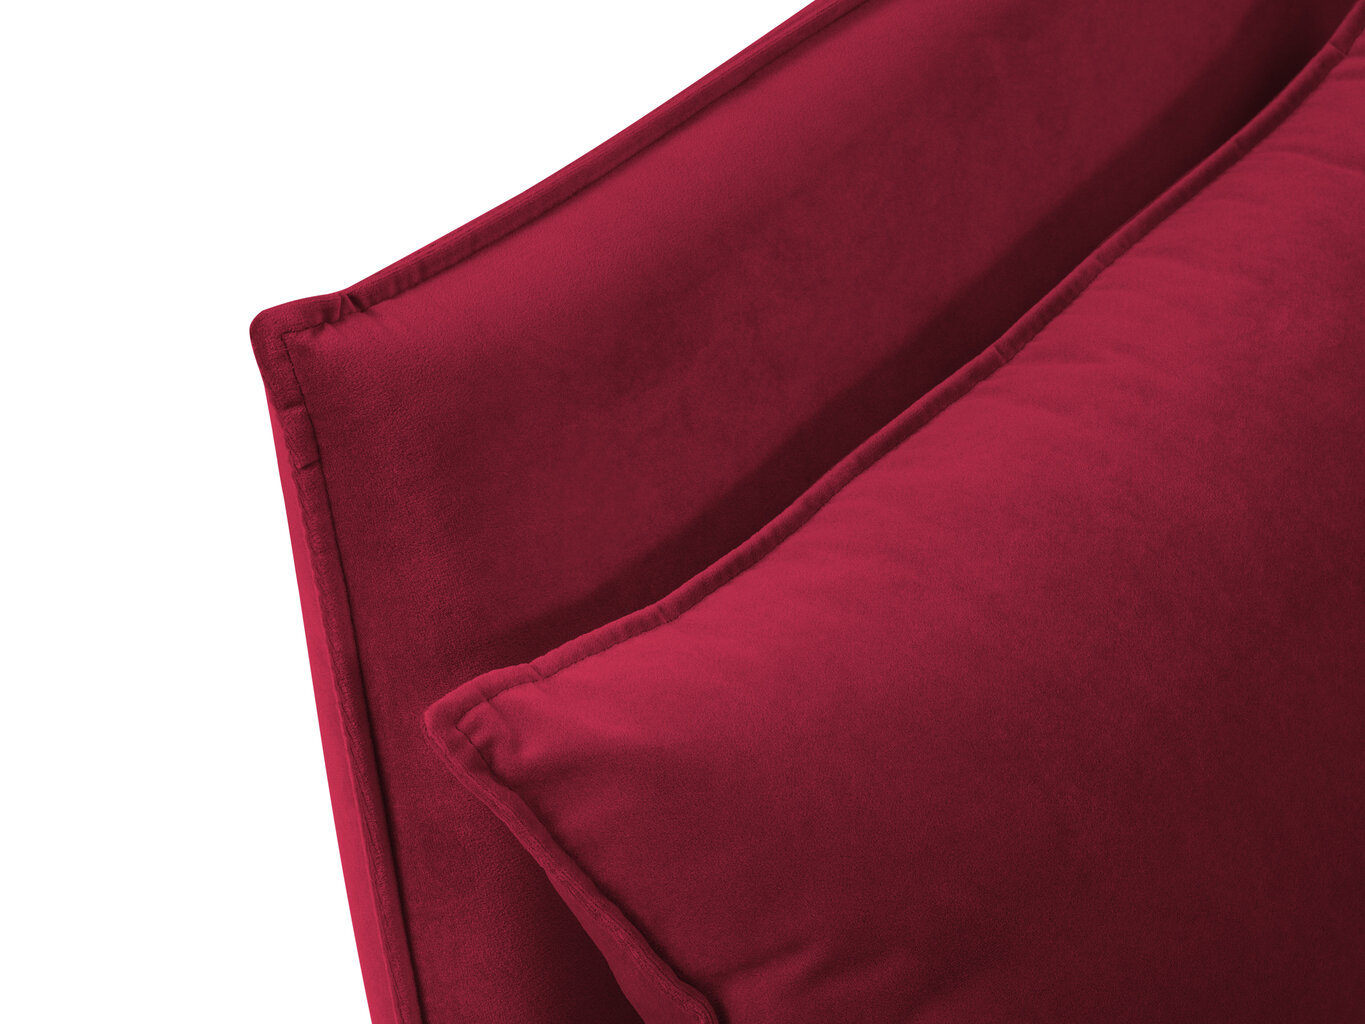 Sofa Micadoni Home Agate 3S, raudona kaina ir informacija | Sofos | pigu.lt